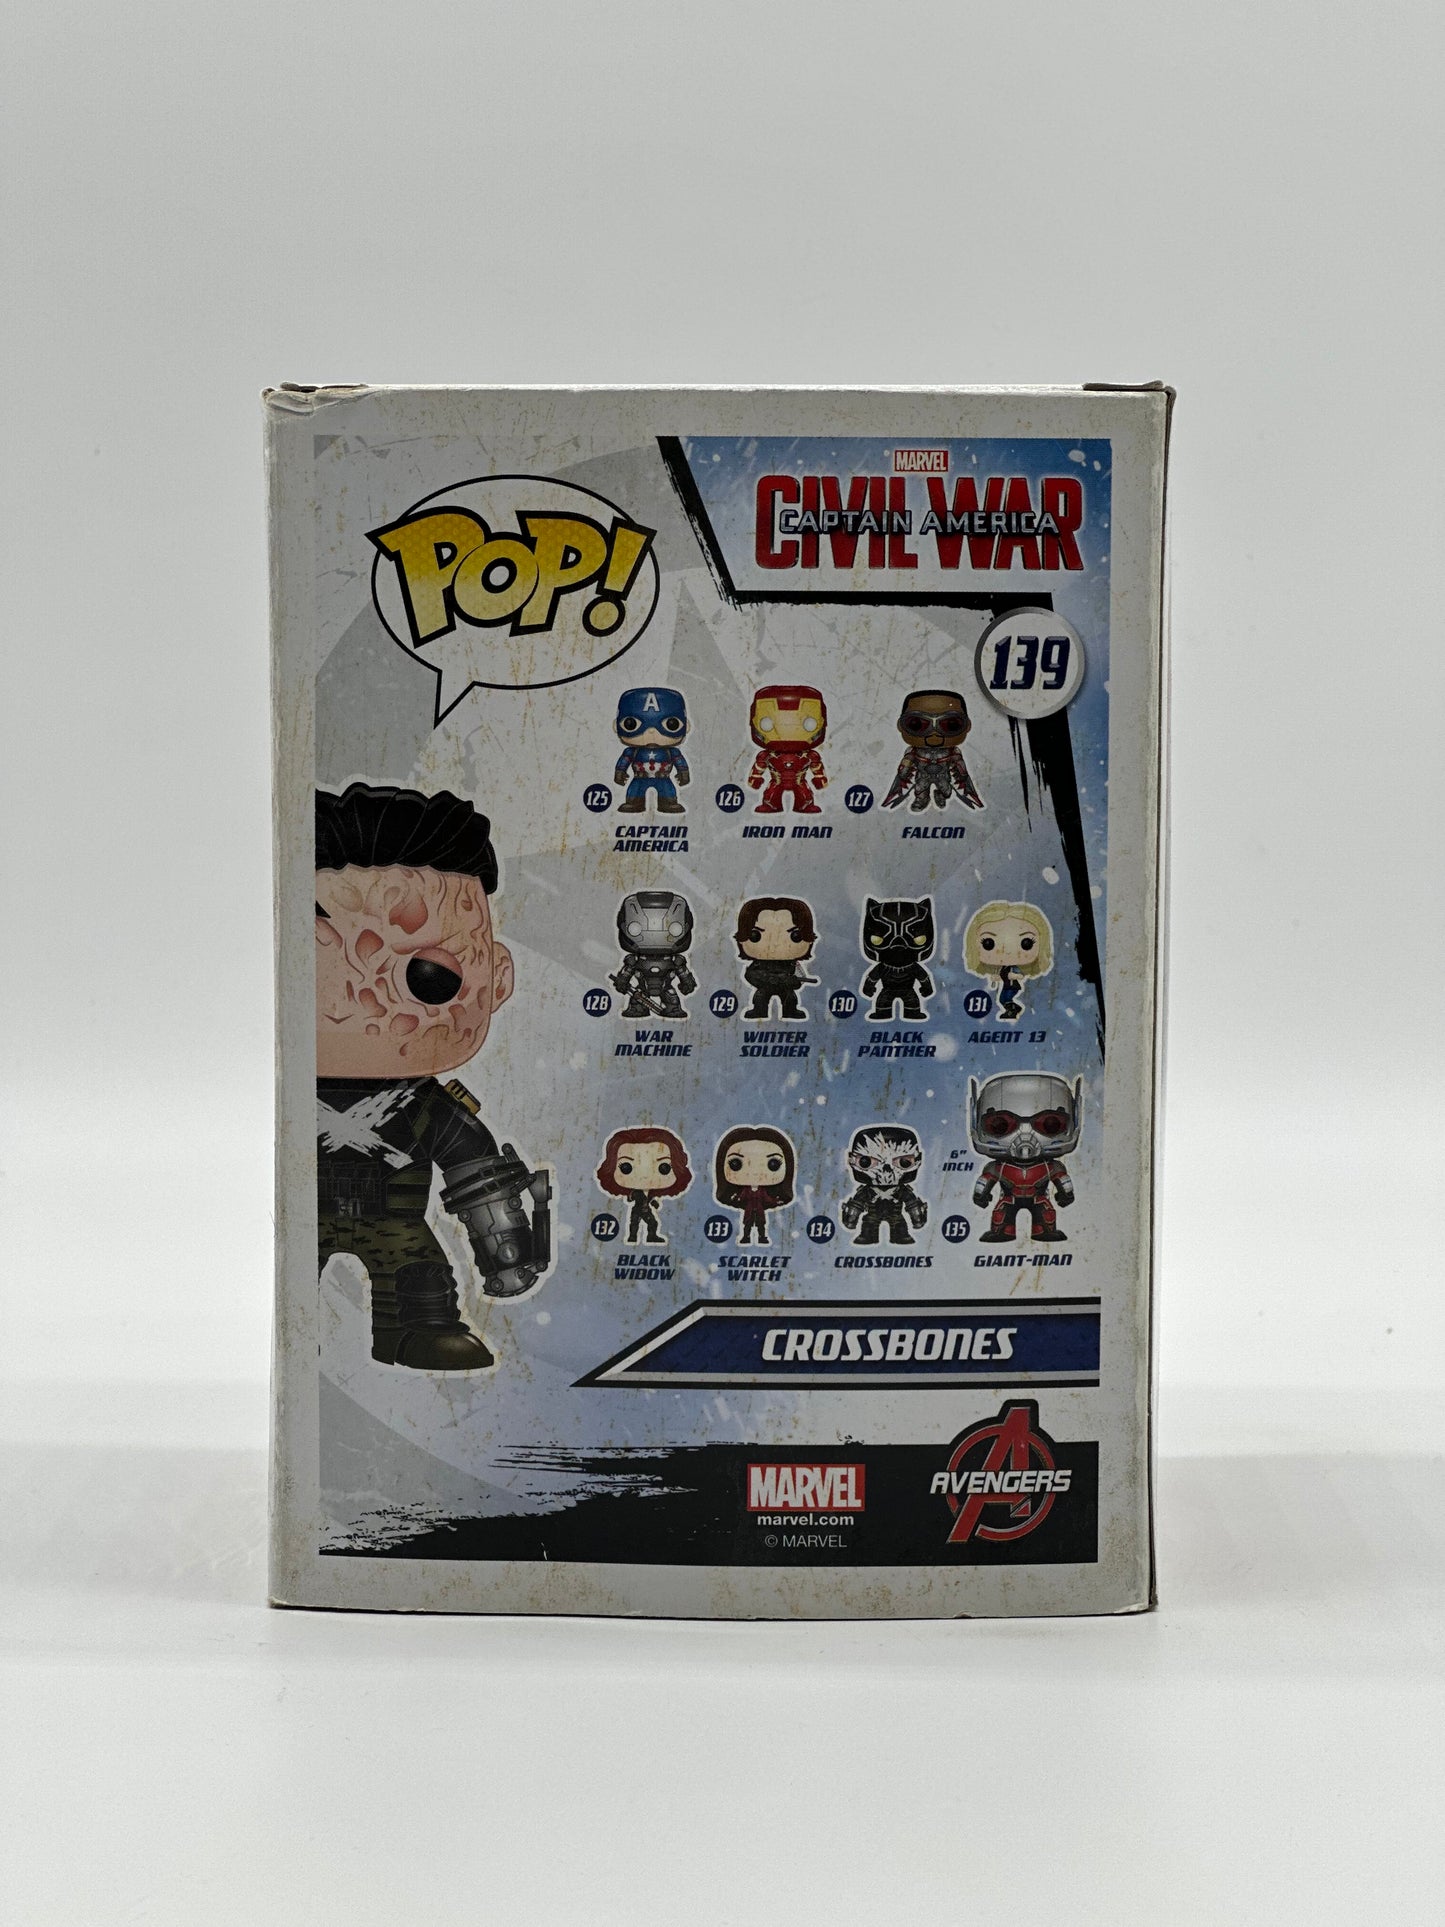 Pop! Marvel Civil War Captain America 139 Crossbones (Unmasked) Barnes & Noble Booksellers Exclusive